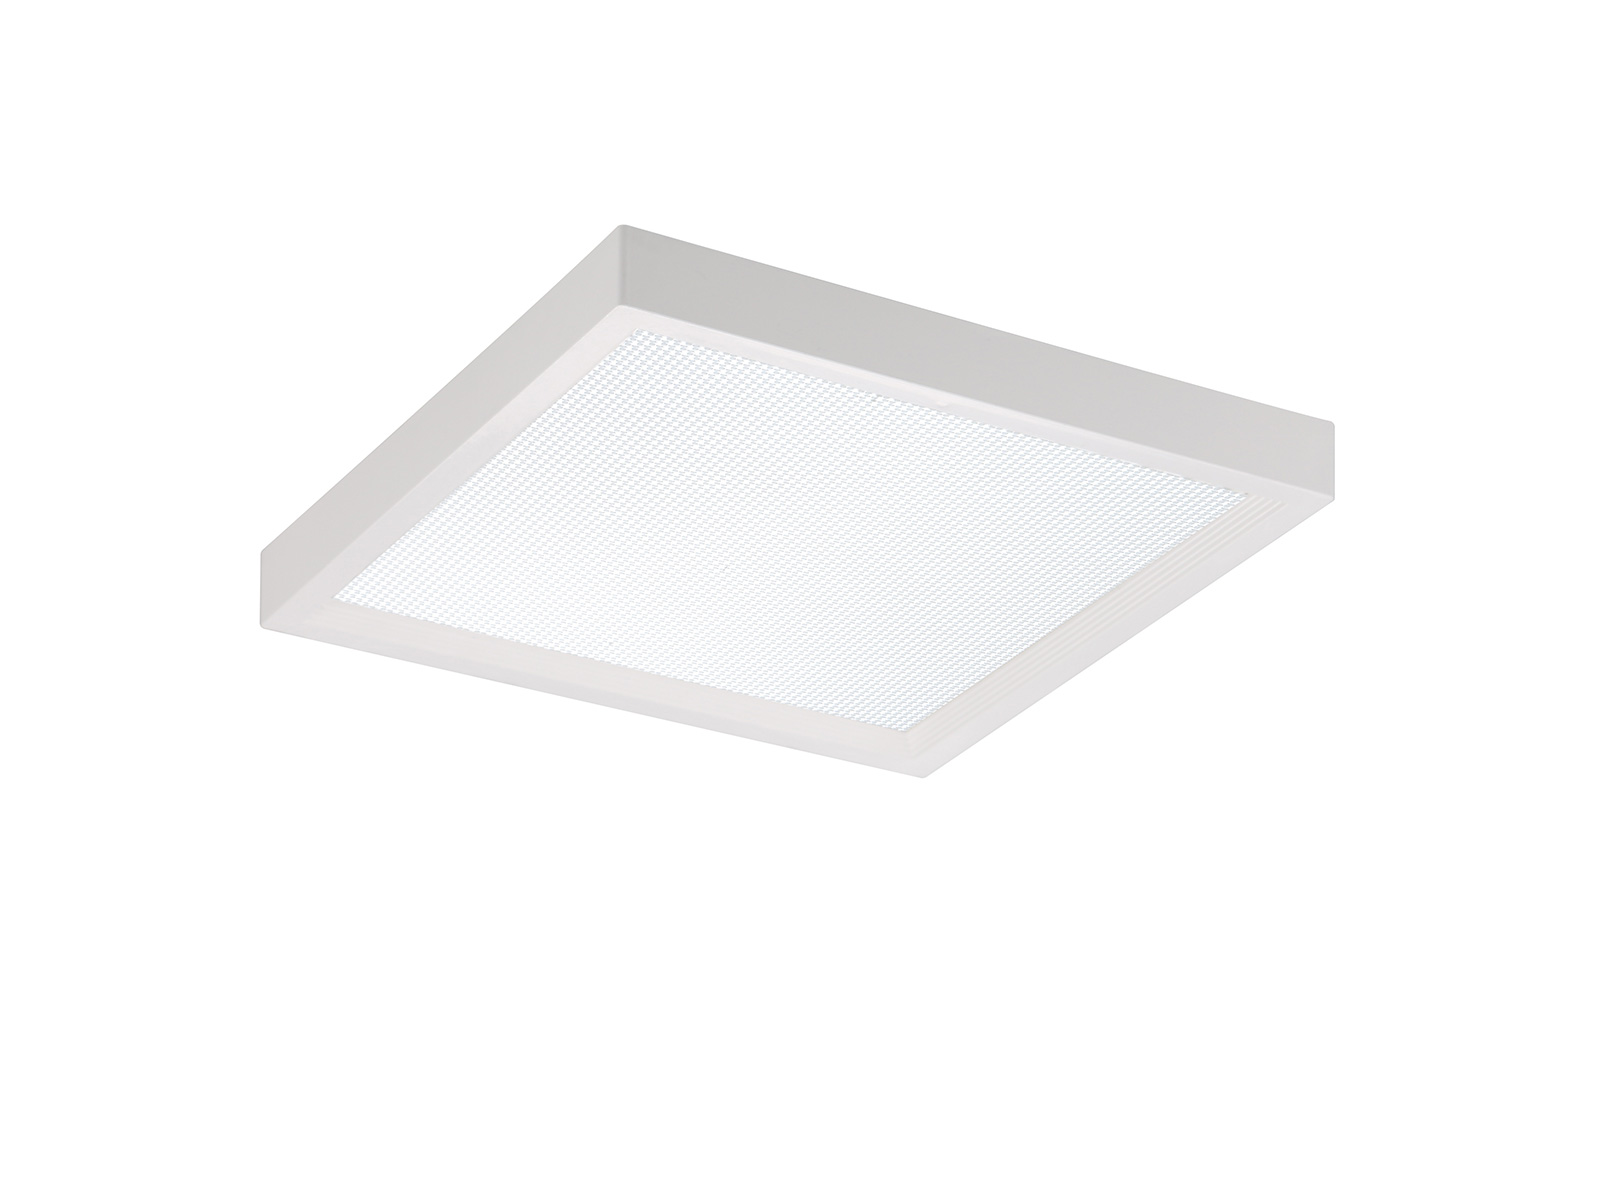 DL100B ultra thin design square panel light